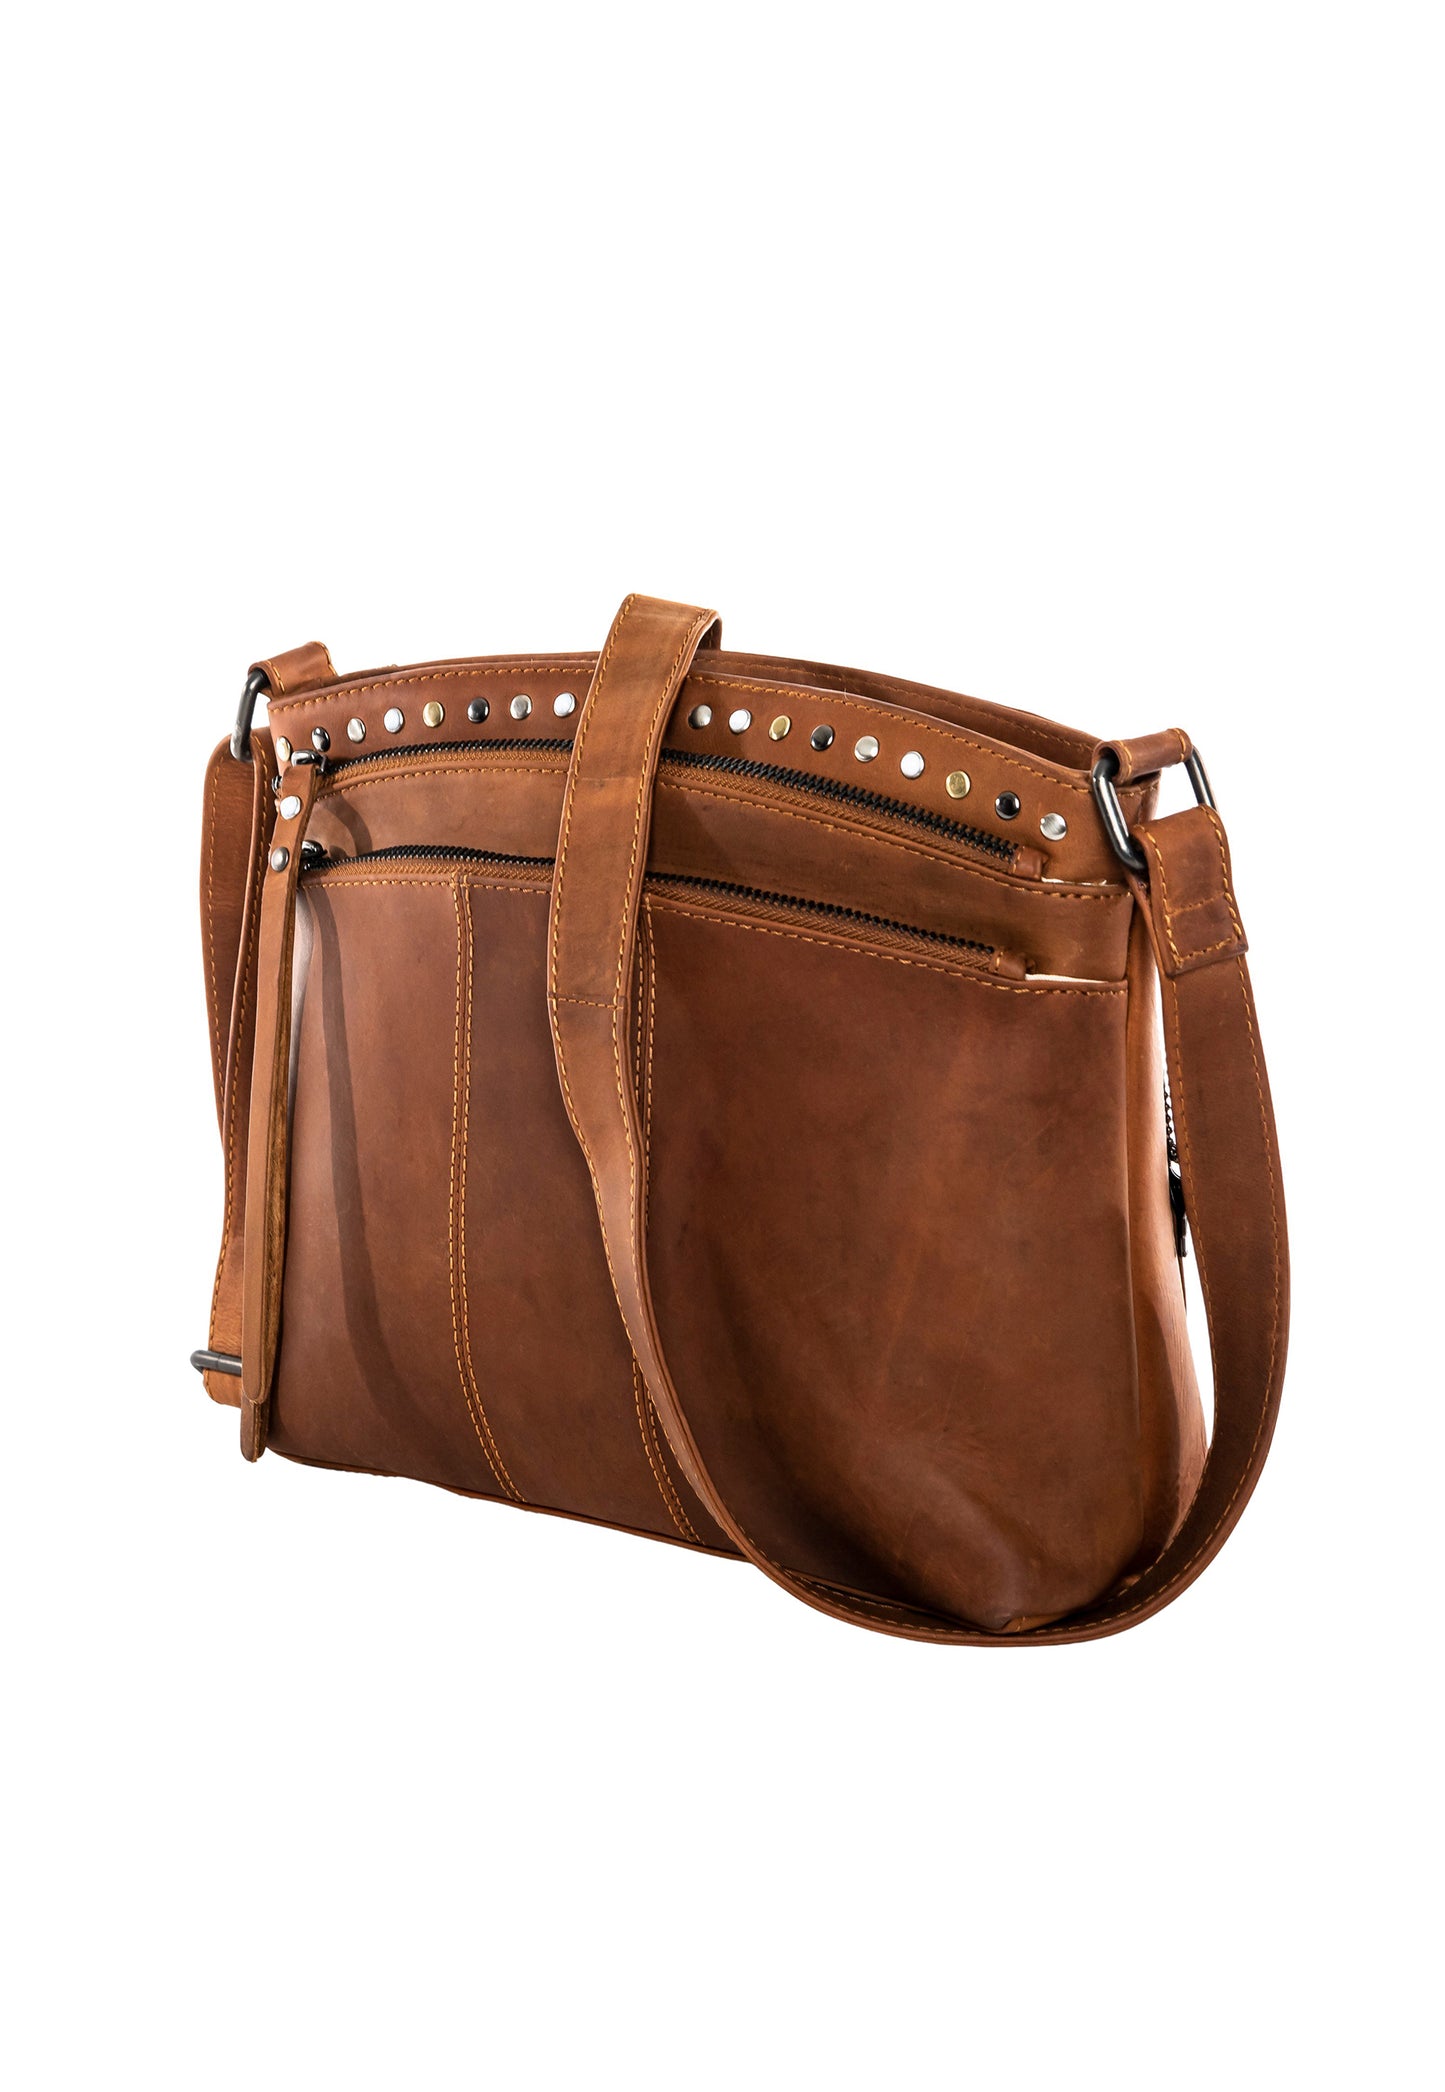 Cognac leather conceal carry purse